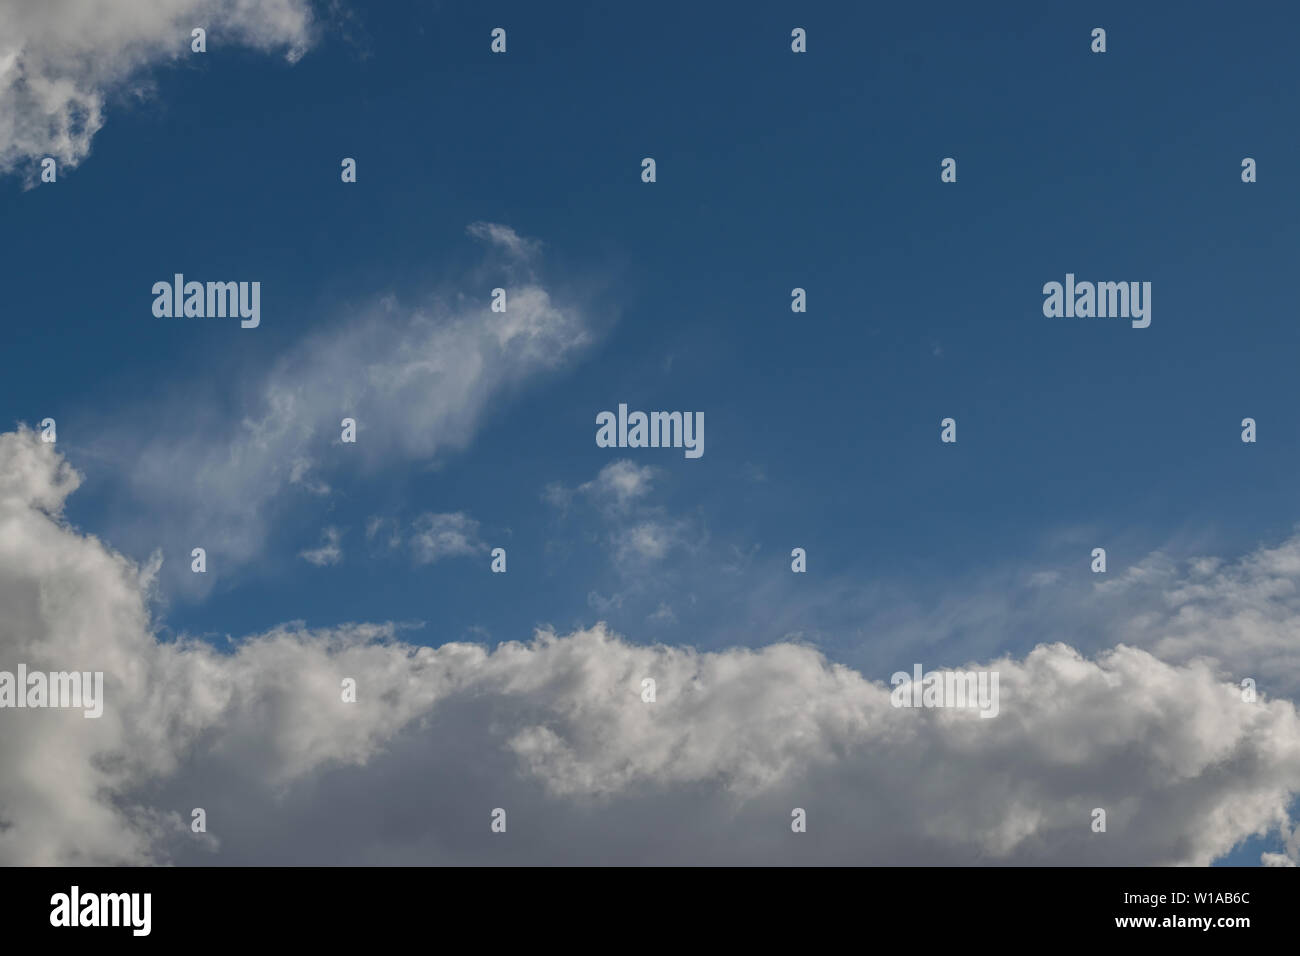 Evolution clouds over blue sky Stock Photo